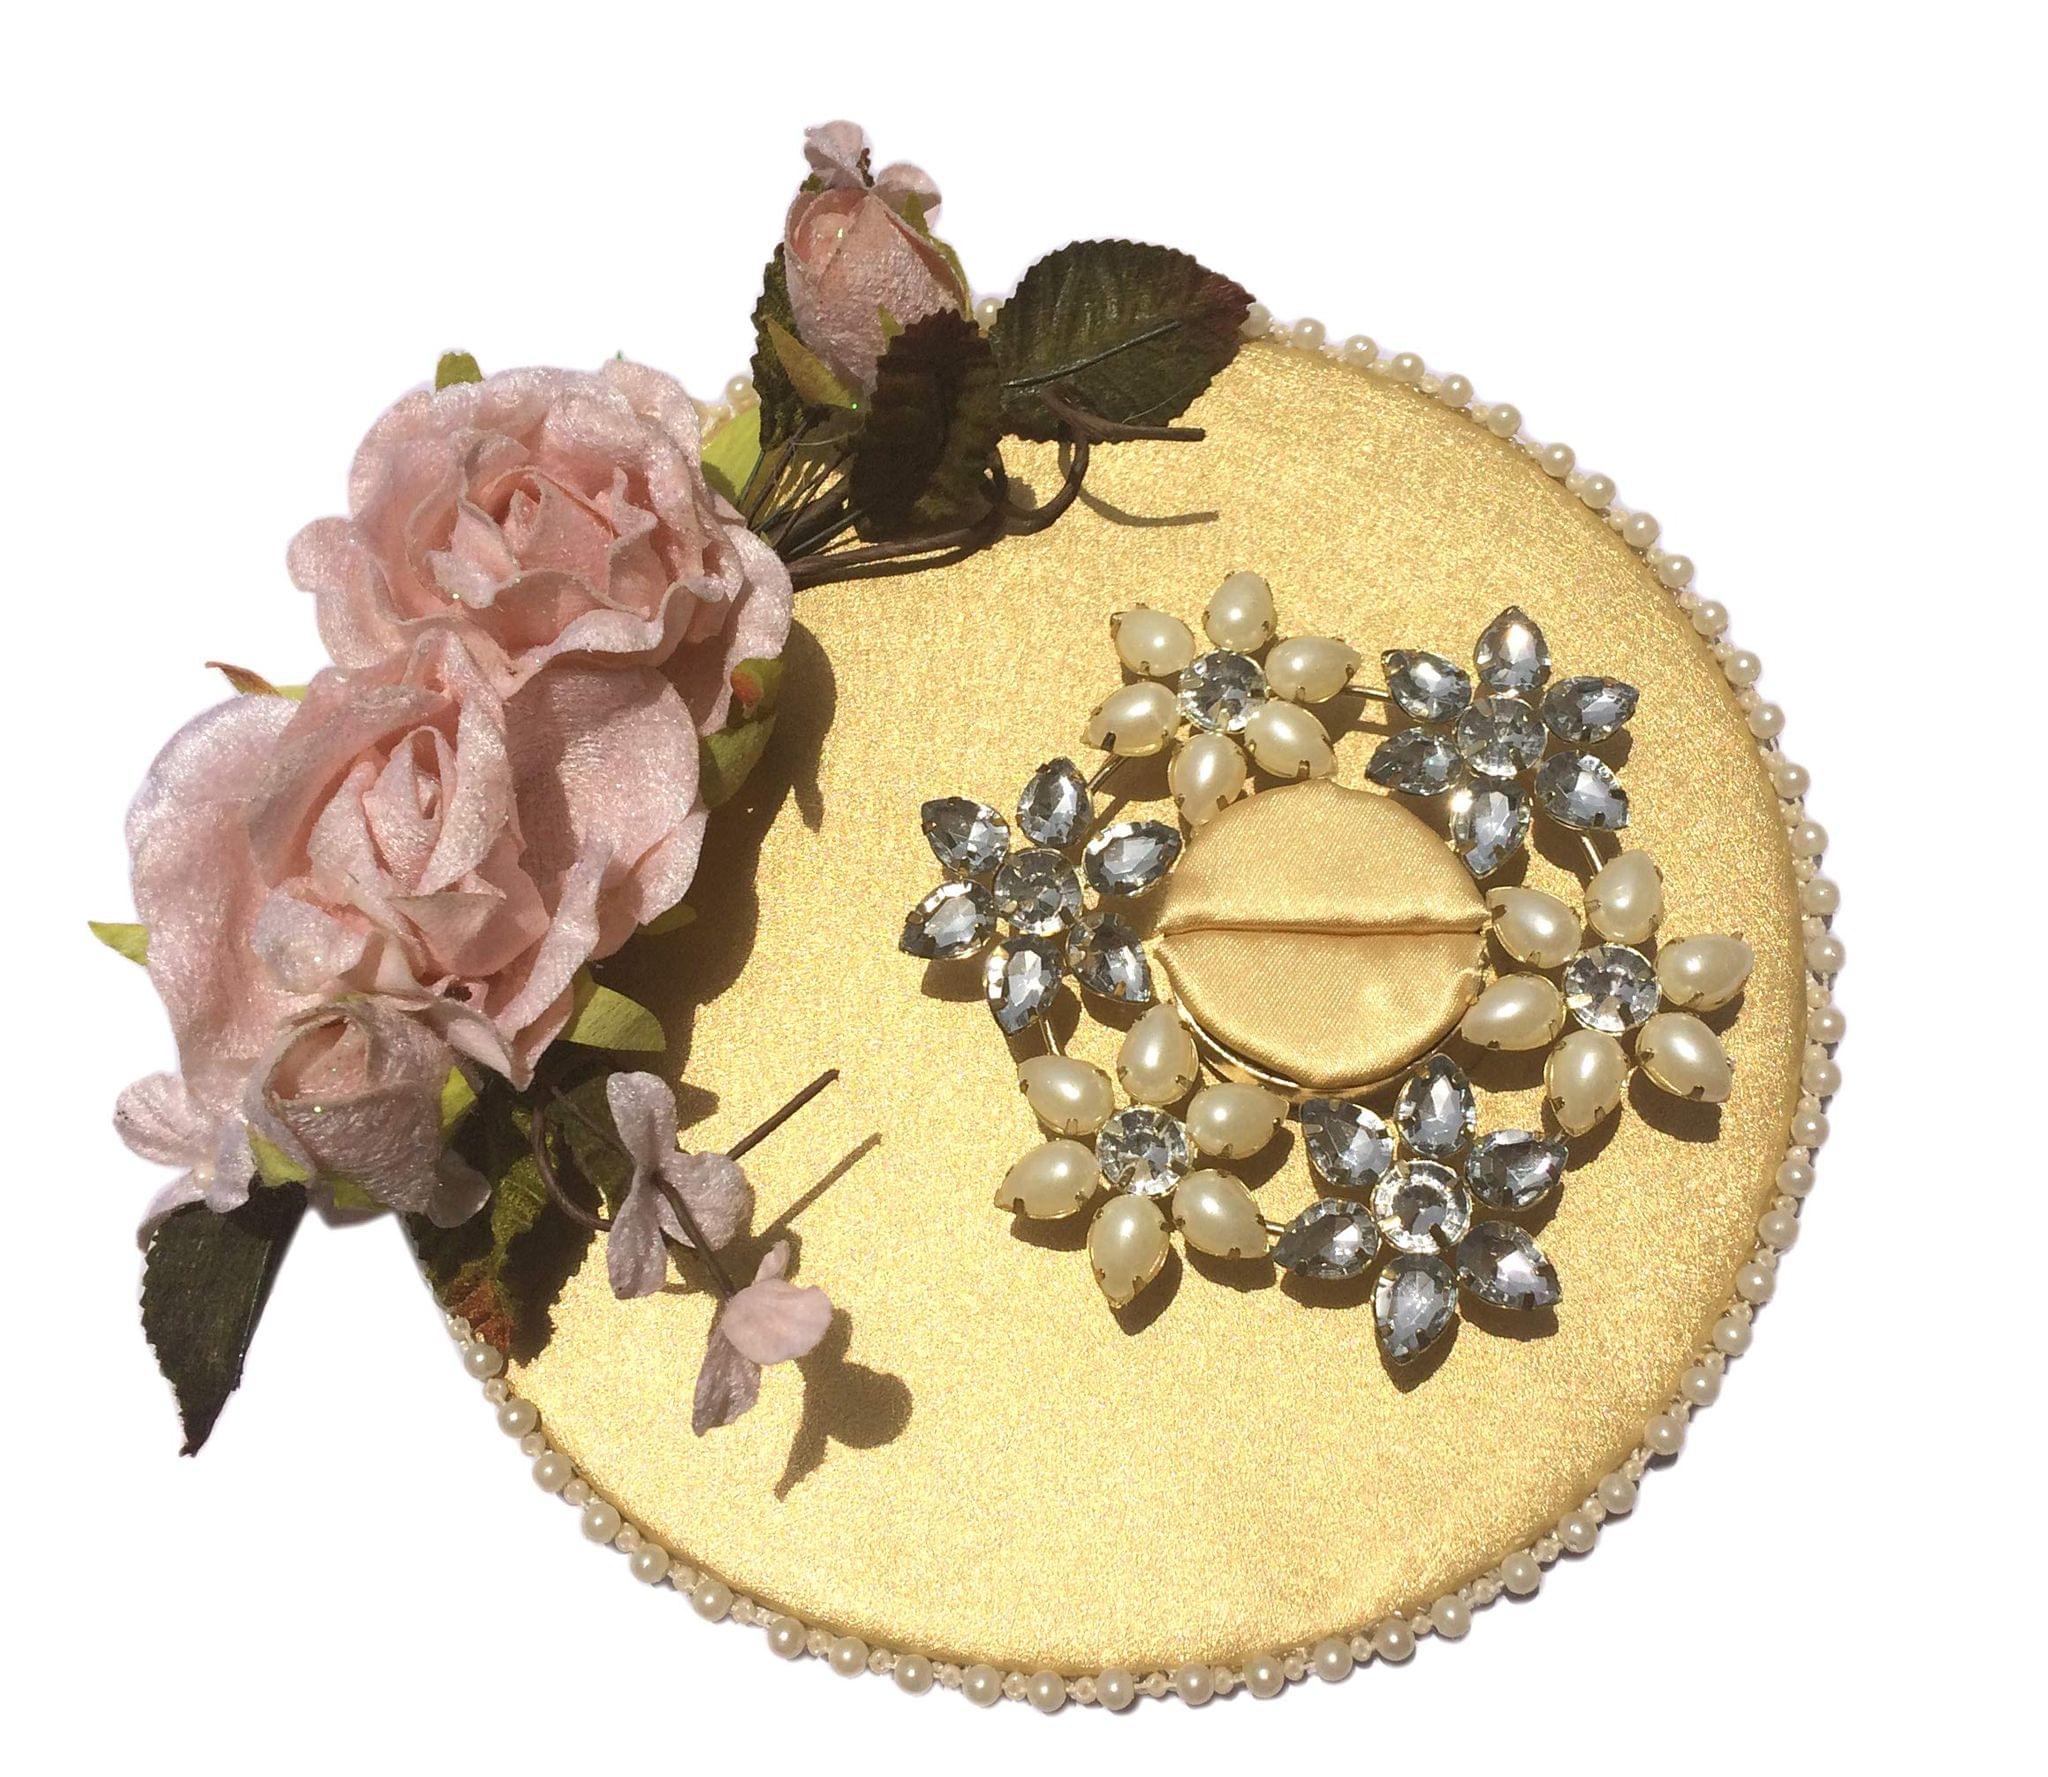 DIY Engagement Ring Platter | Engagement Ring Tray Decoration Ideas -  YouTube